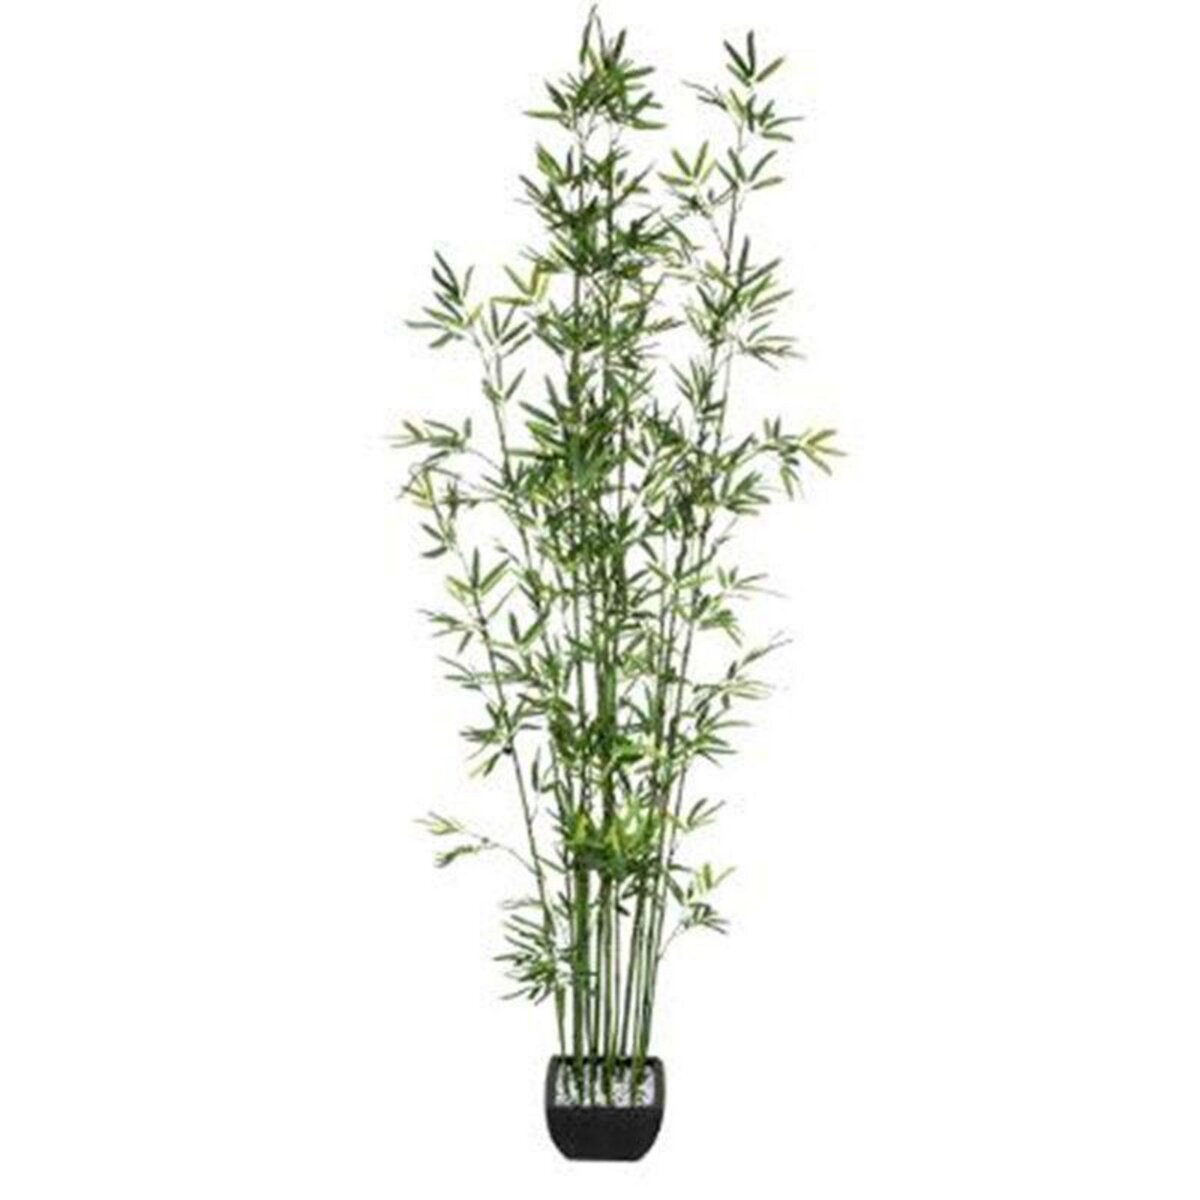  Plante Artificielle en Pot  Bambou  183cm Vert & Noir